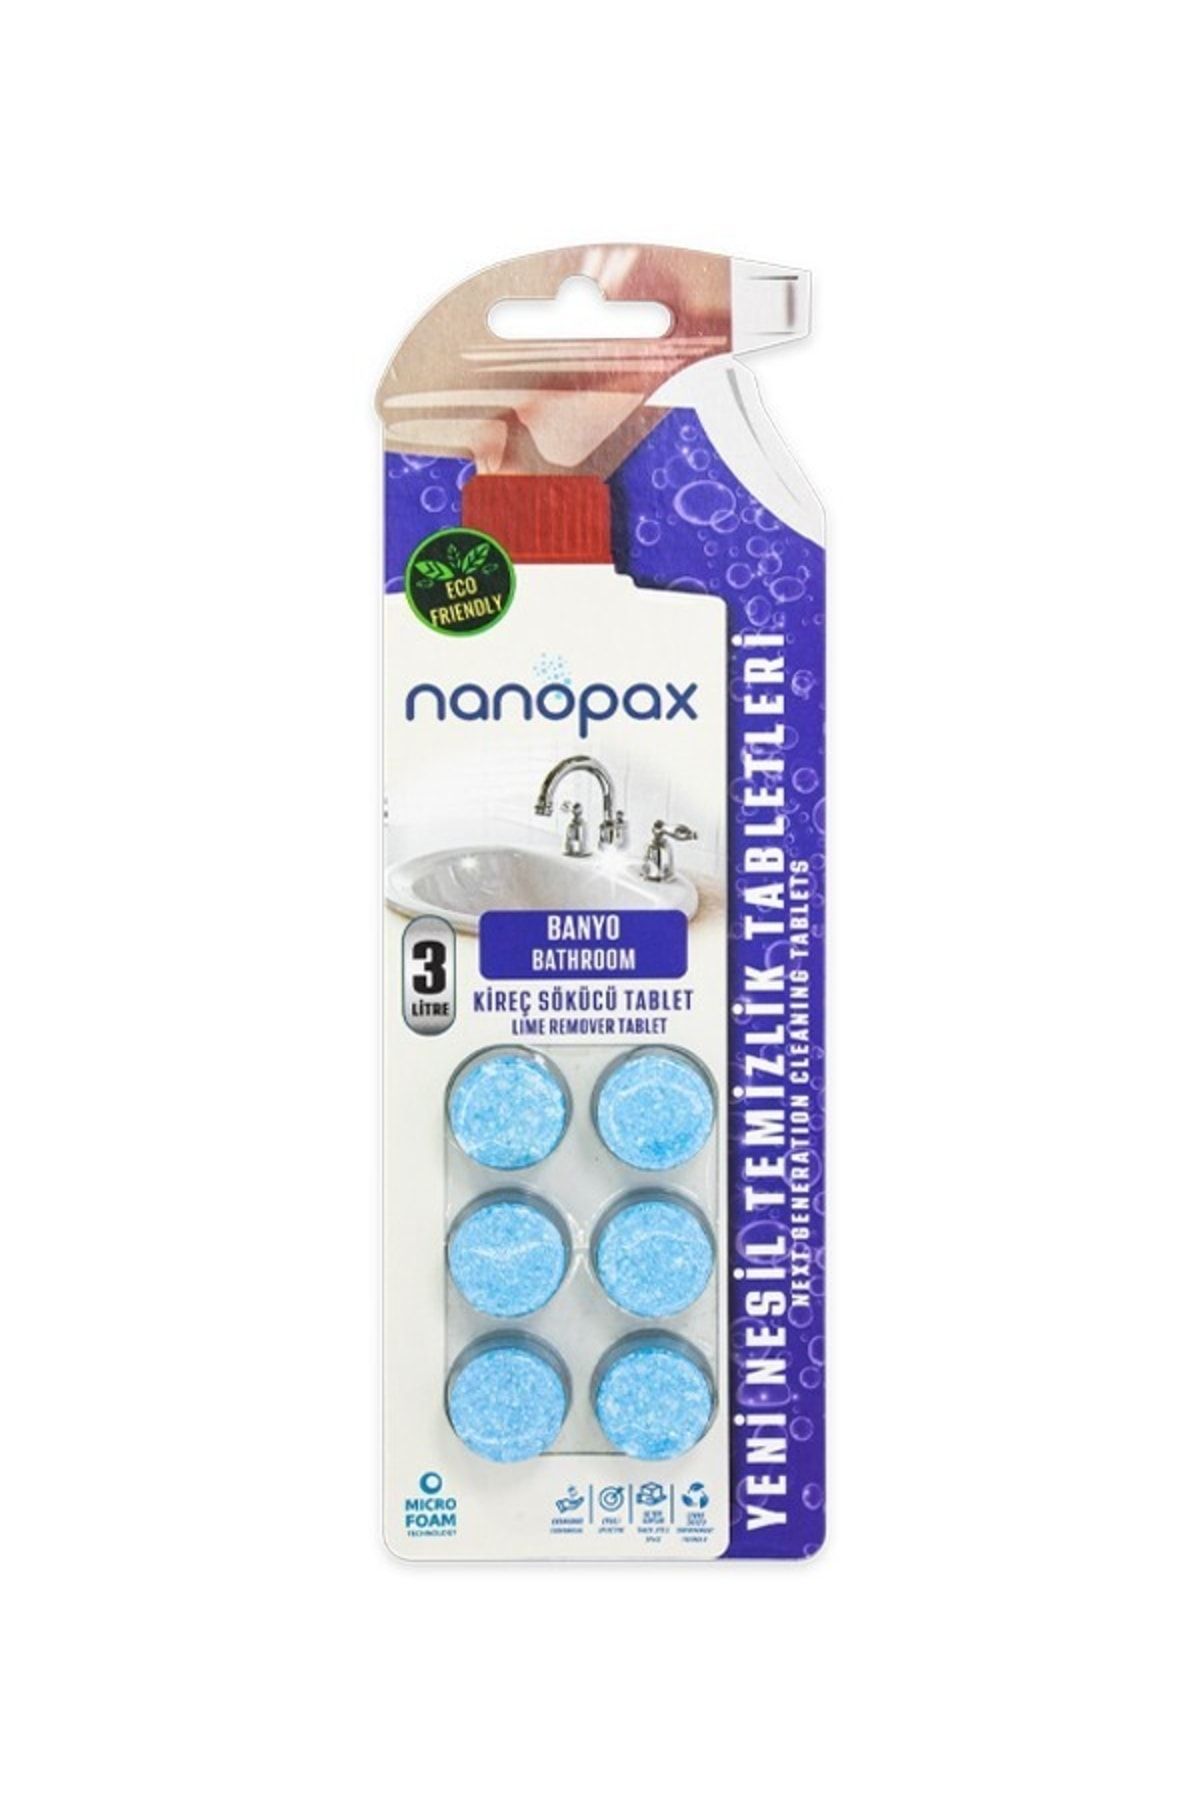 Miniso Nanopax Kireç Sökücü Temizlik Tableti 6 Tablet 3 L